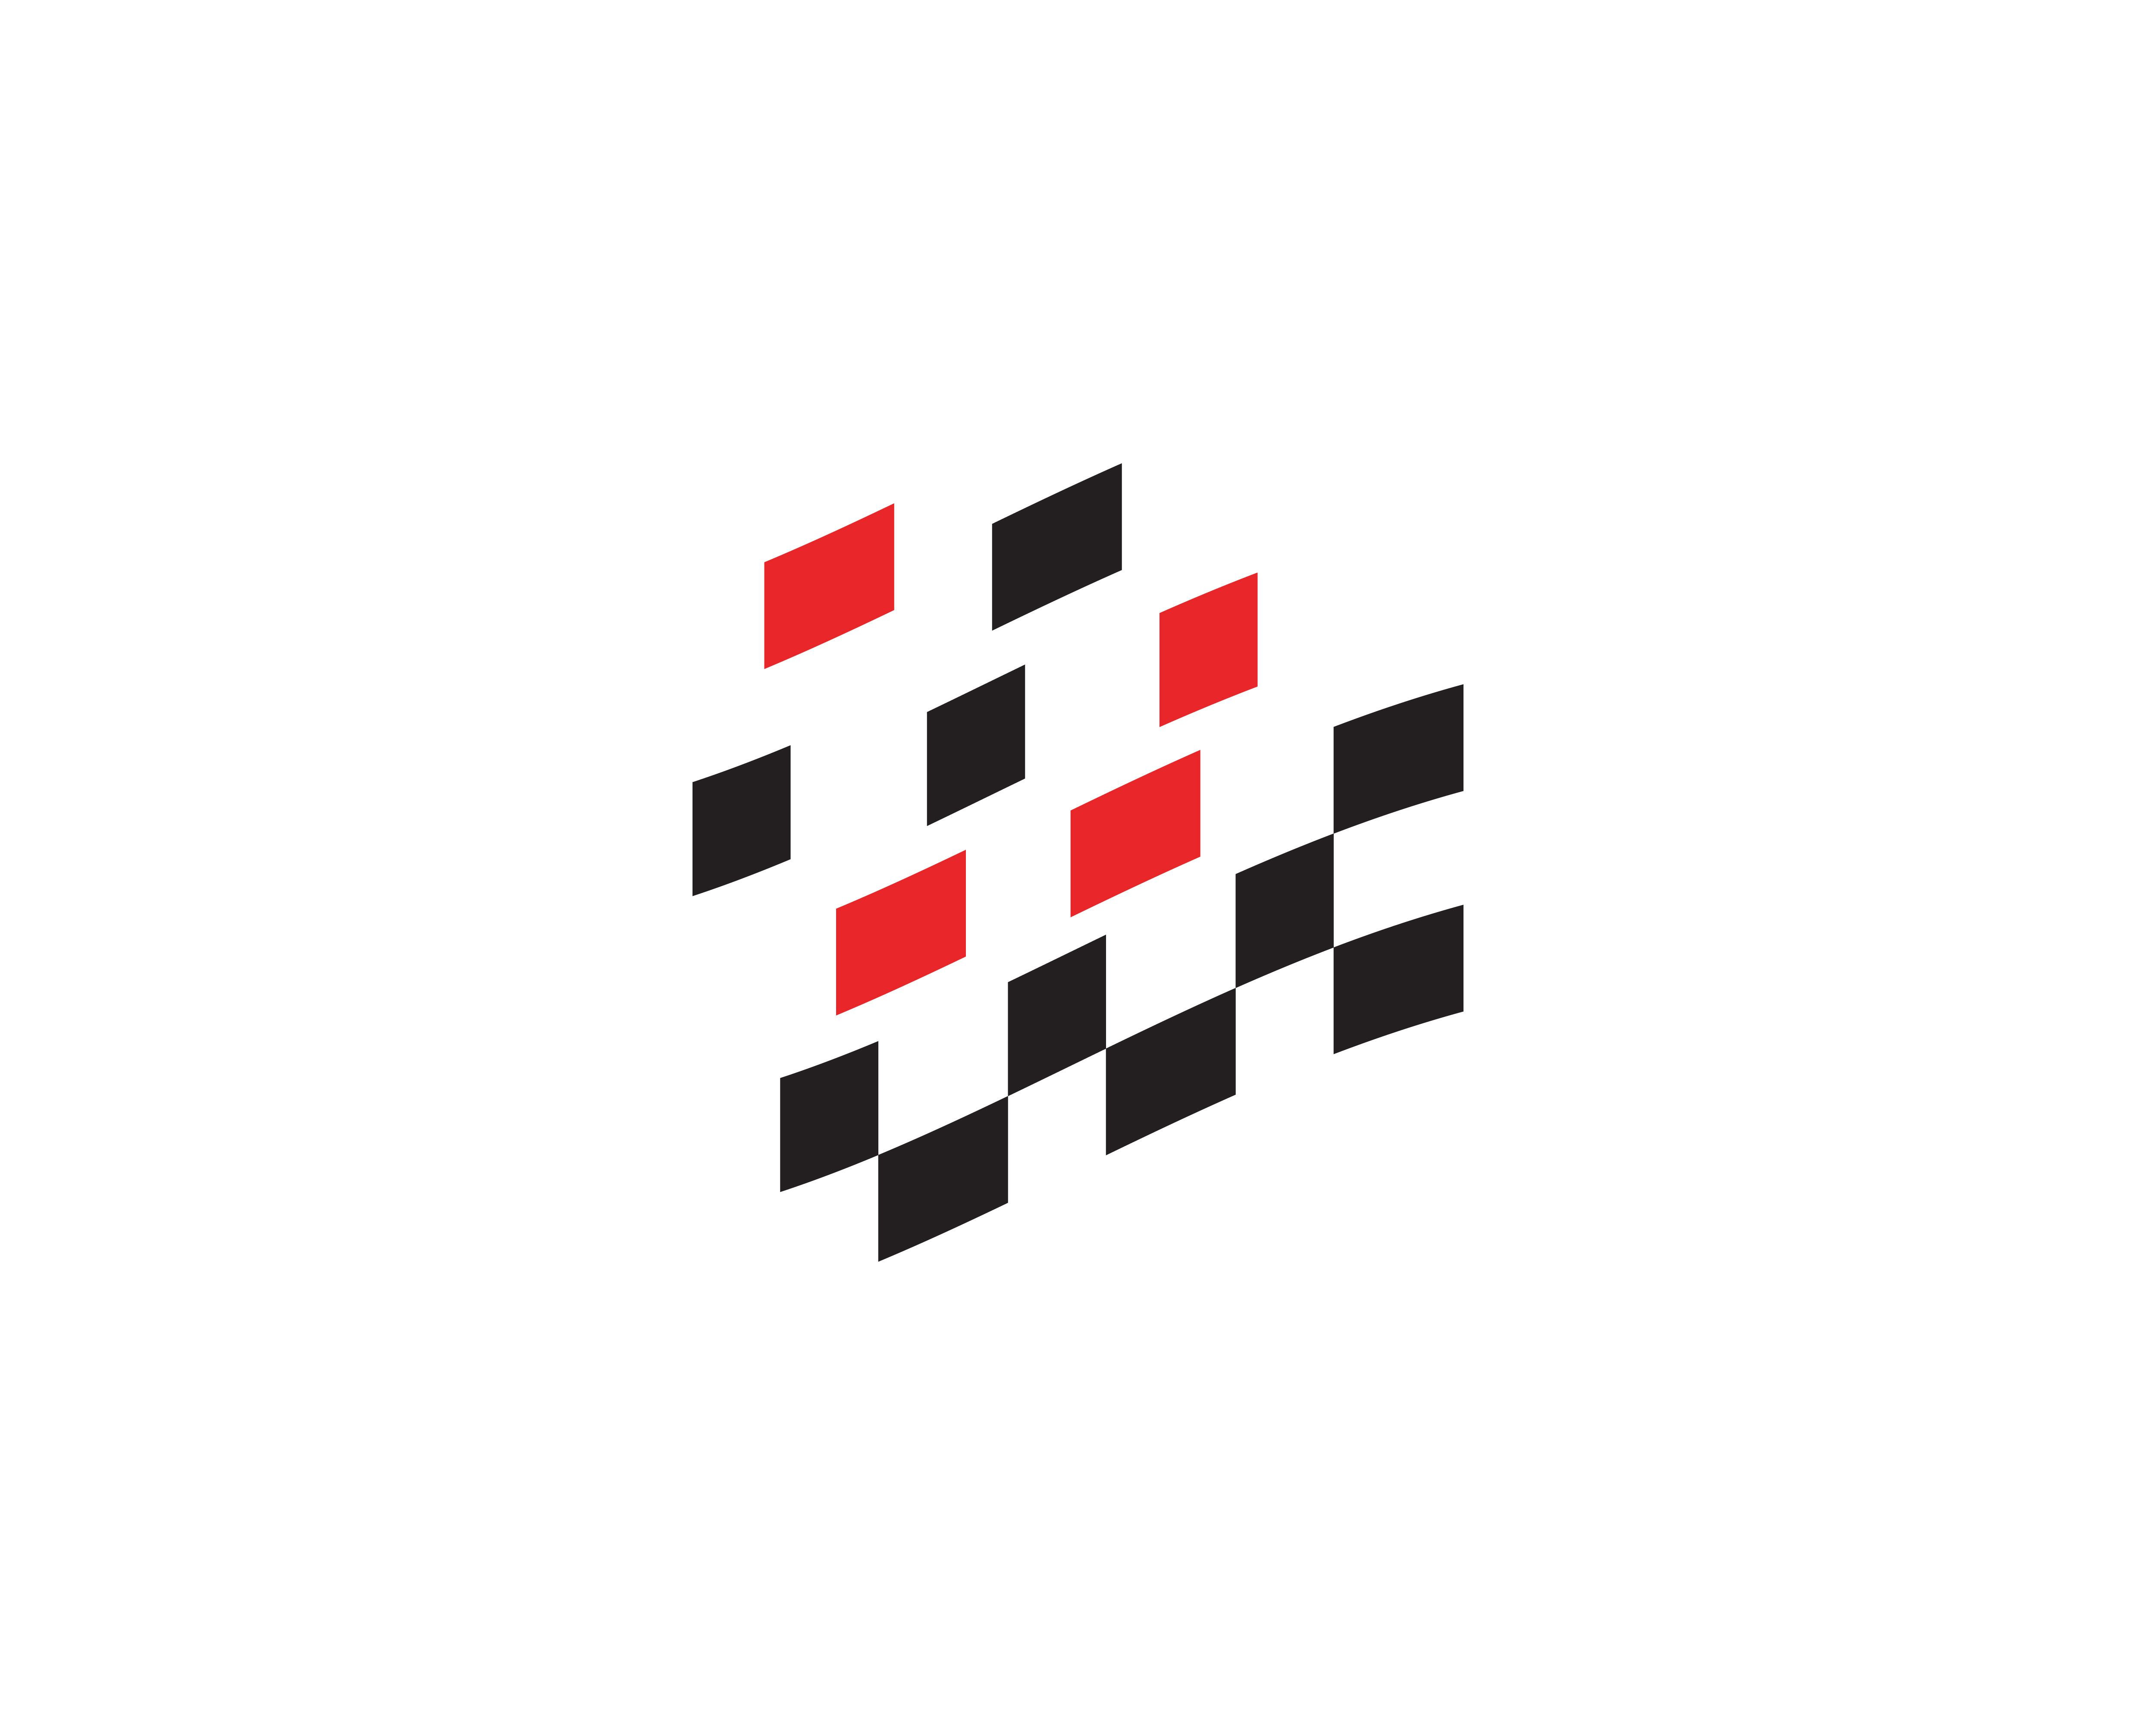 Race flag icon, simple design logo 596141 - Download Free Vectors